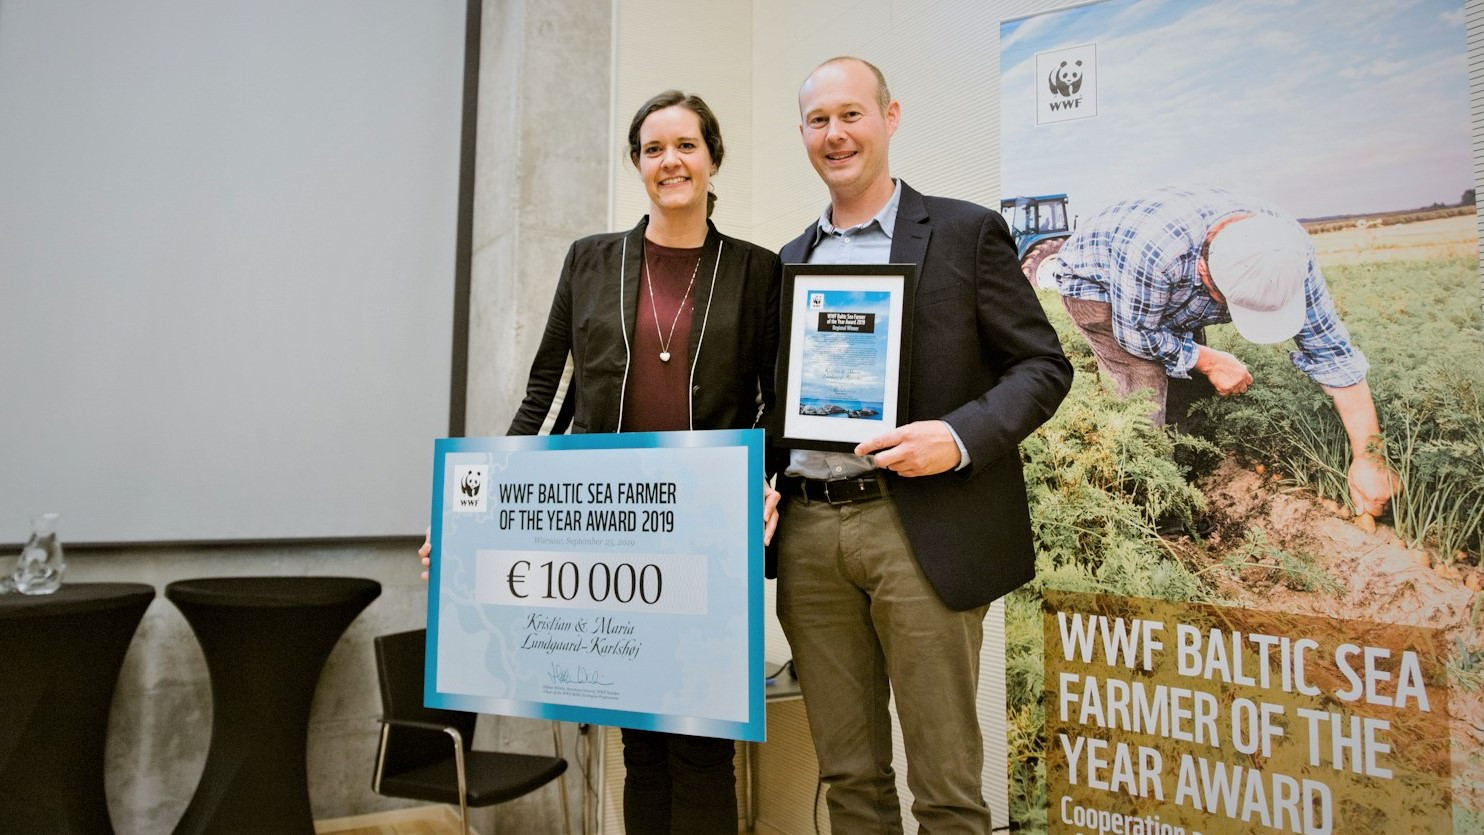 Landmandsparret Kristian og Maria Lundgaard-Karlshøj har som de første danskere netop vundet WWF's pris Baltic Sea Farmer of the Year Award. Her står de og fremviser diplomet og checken på 10.000 euro.